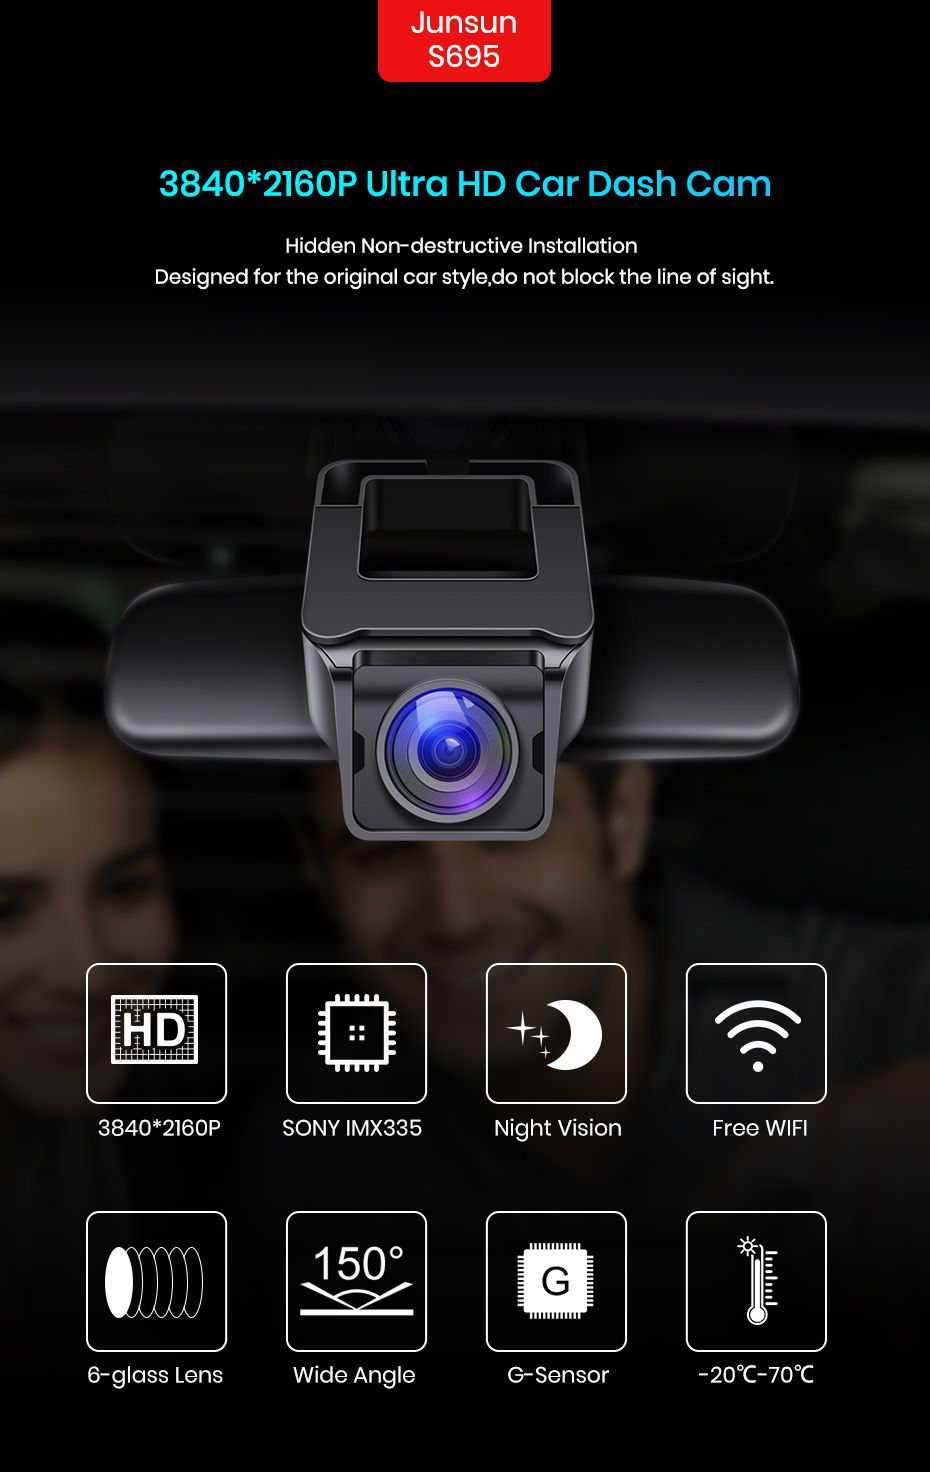 JUNSUN-S695-4K-GPS-WiFi-Night-Vision-App-Remote-Control-Car-DVR-Camera-1512795